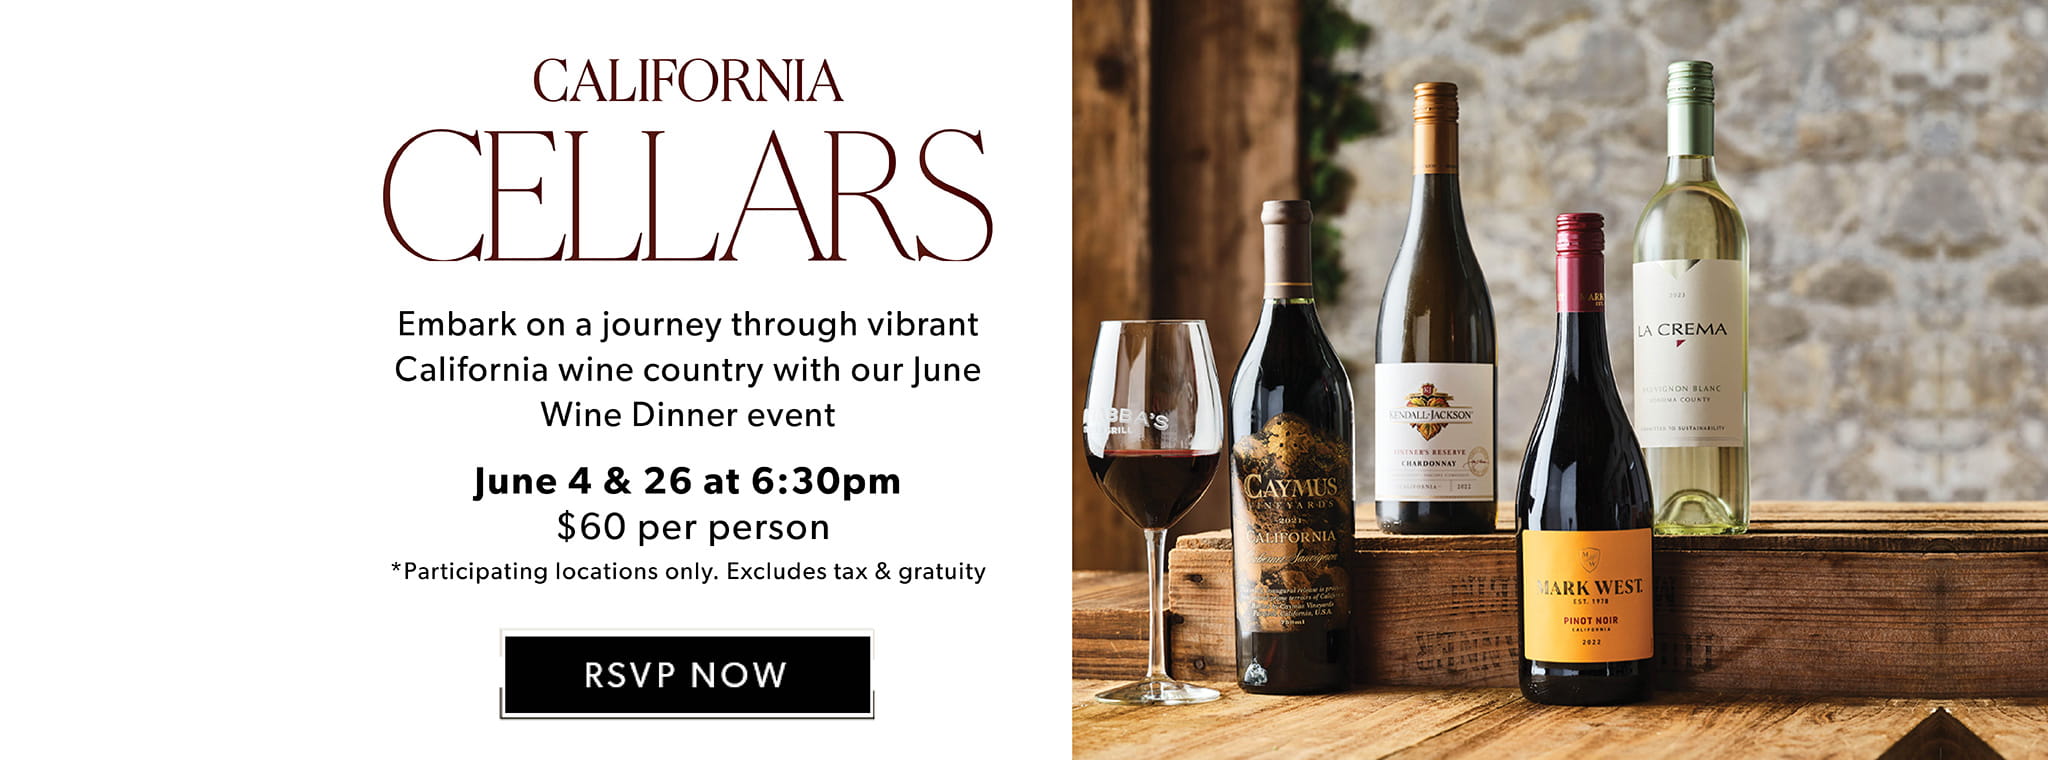 Carrabba's June Wine Dinner - California Cellars